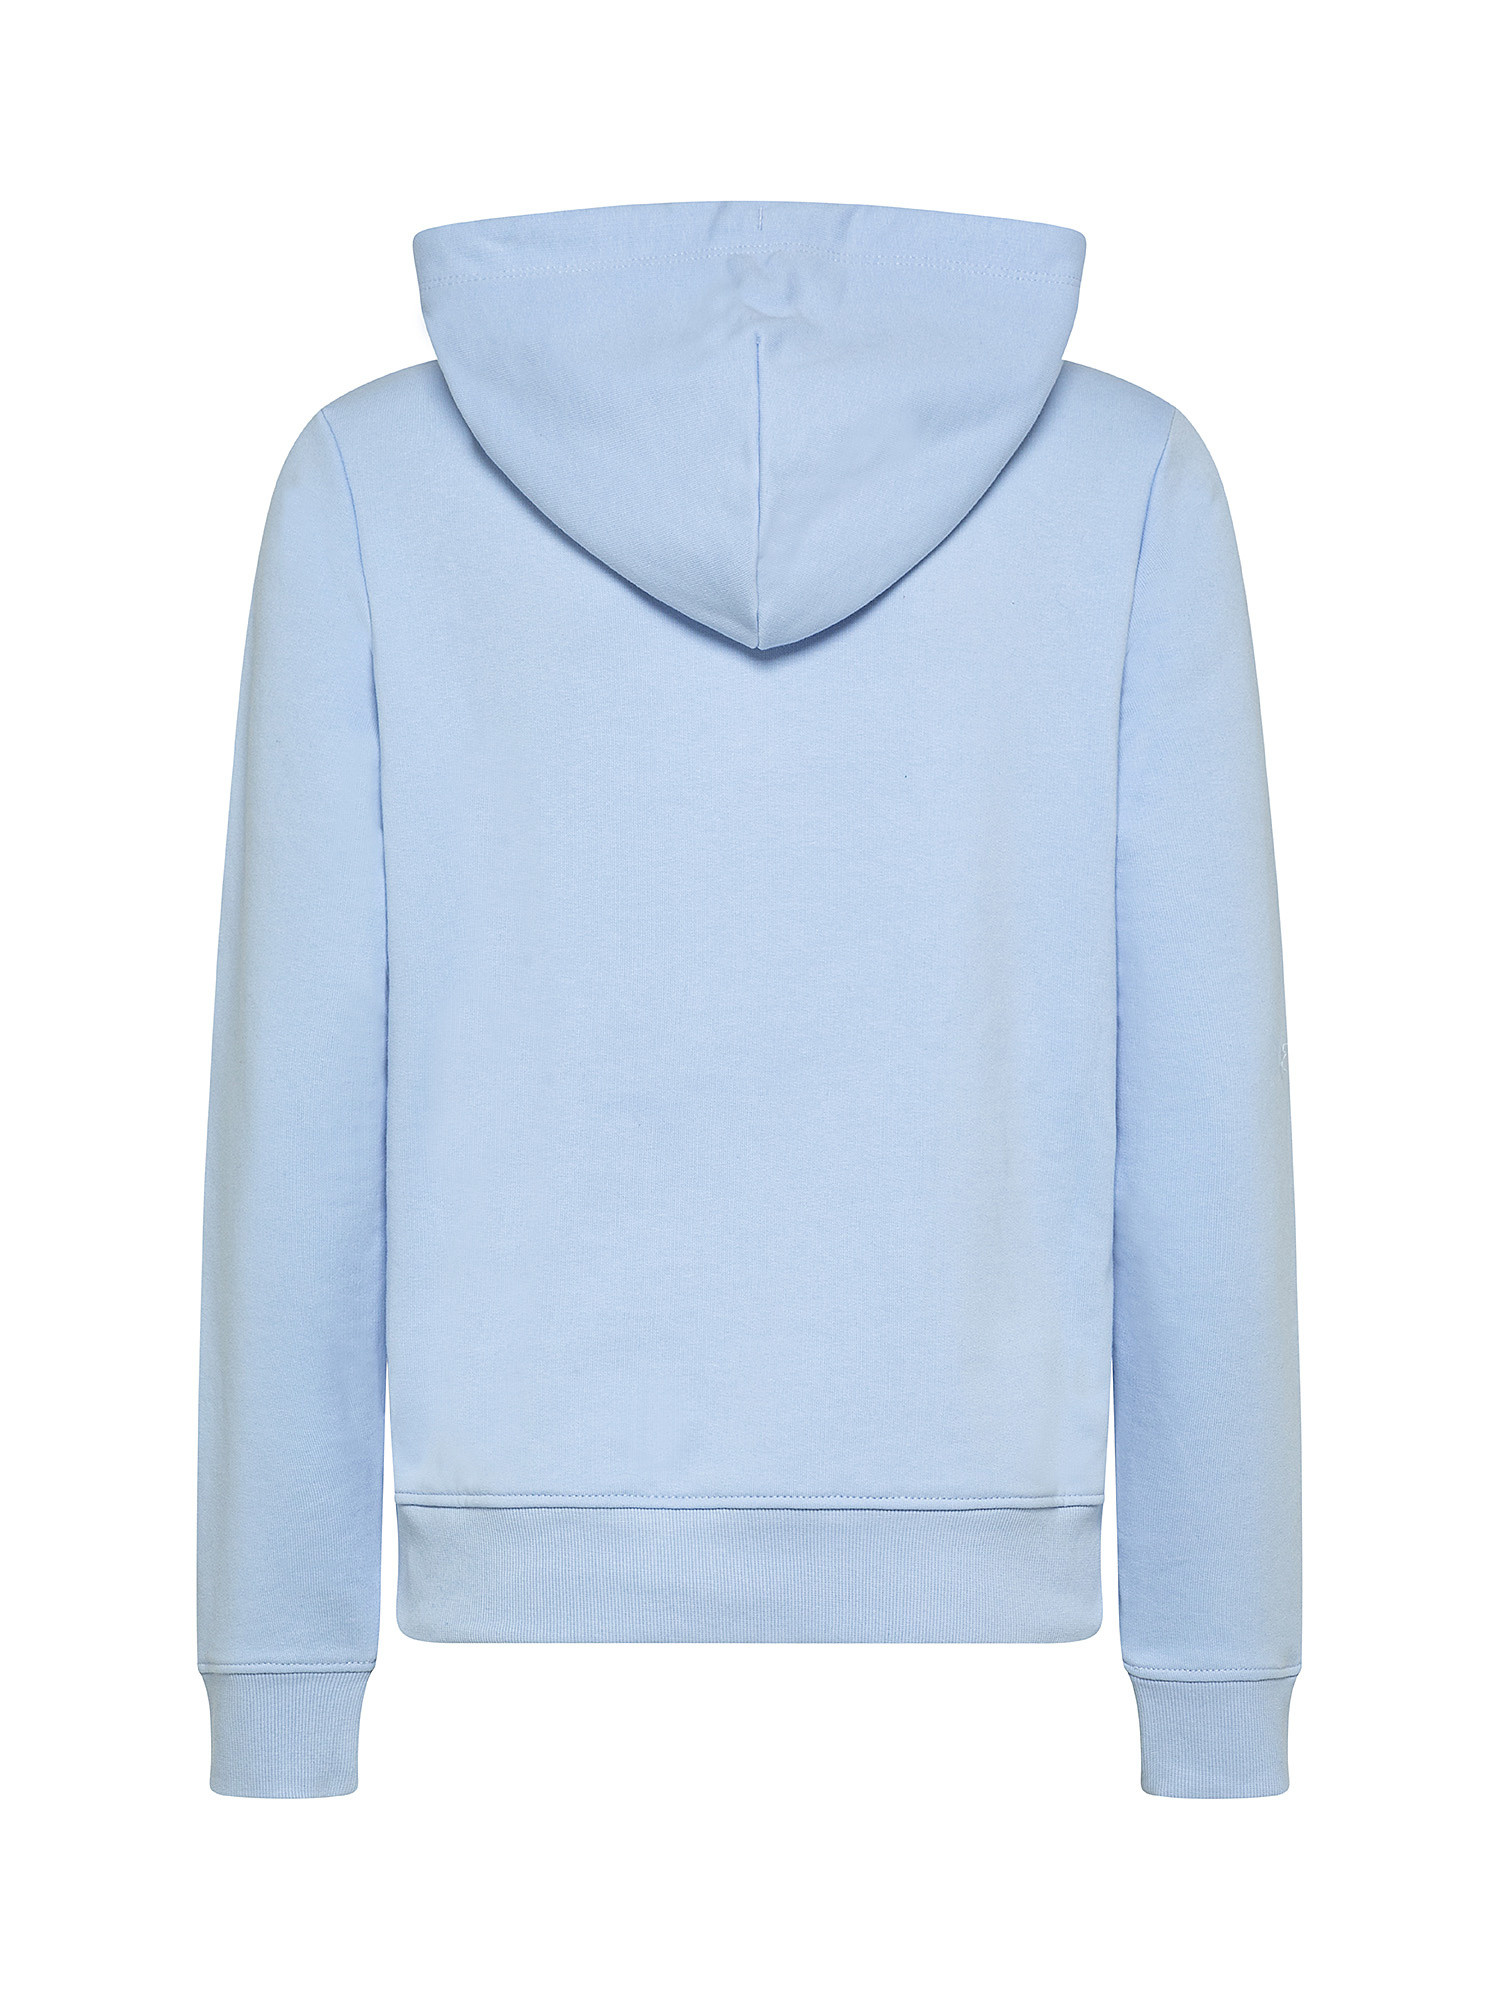 Hooded sweatshirt with logo, Light Blue, large image number 1